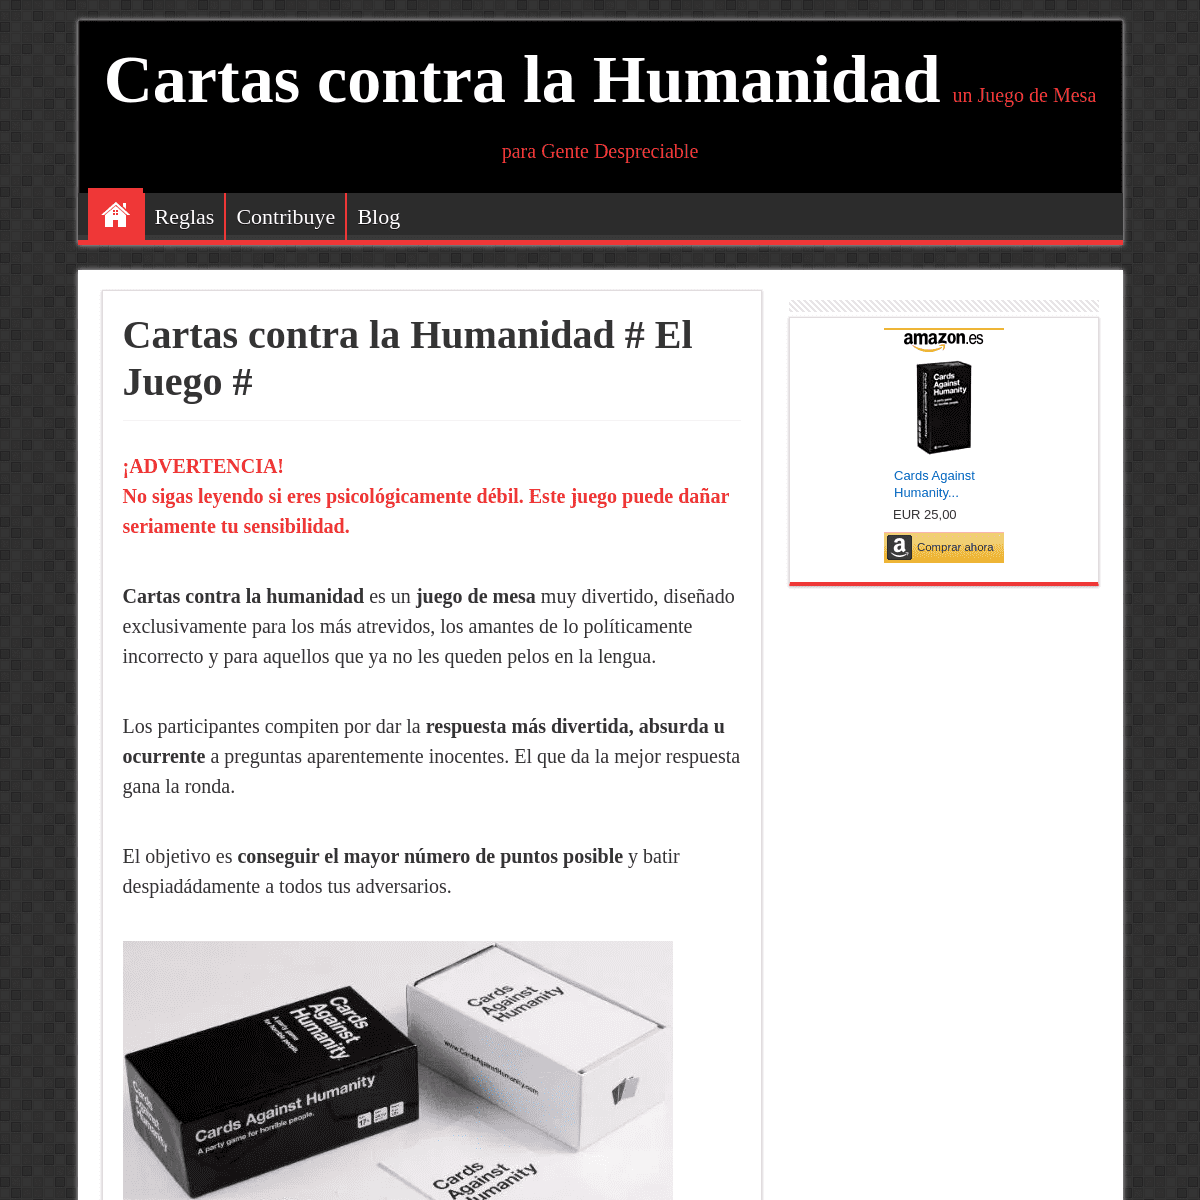 A complete backup of cartascontralahumanidad.com